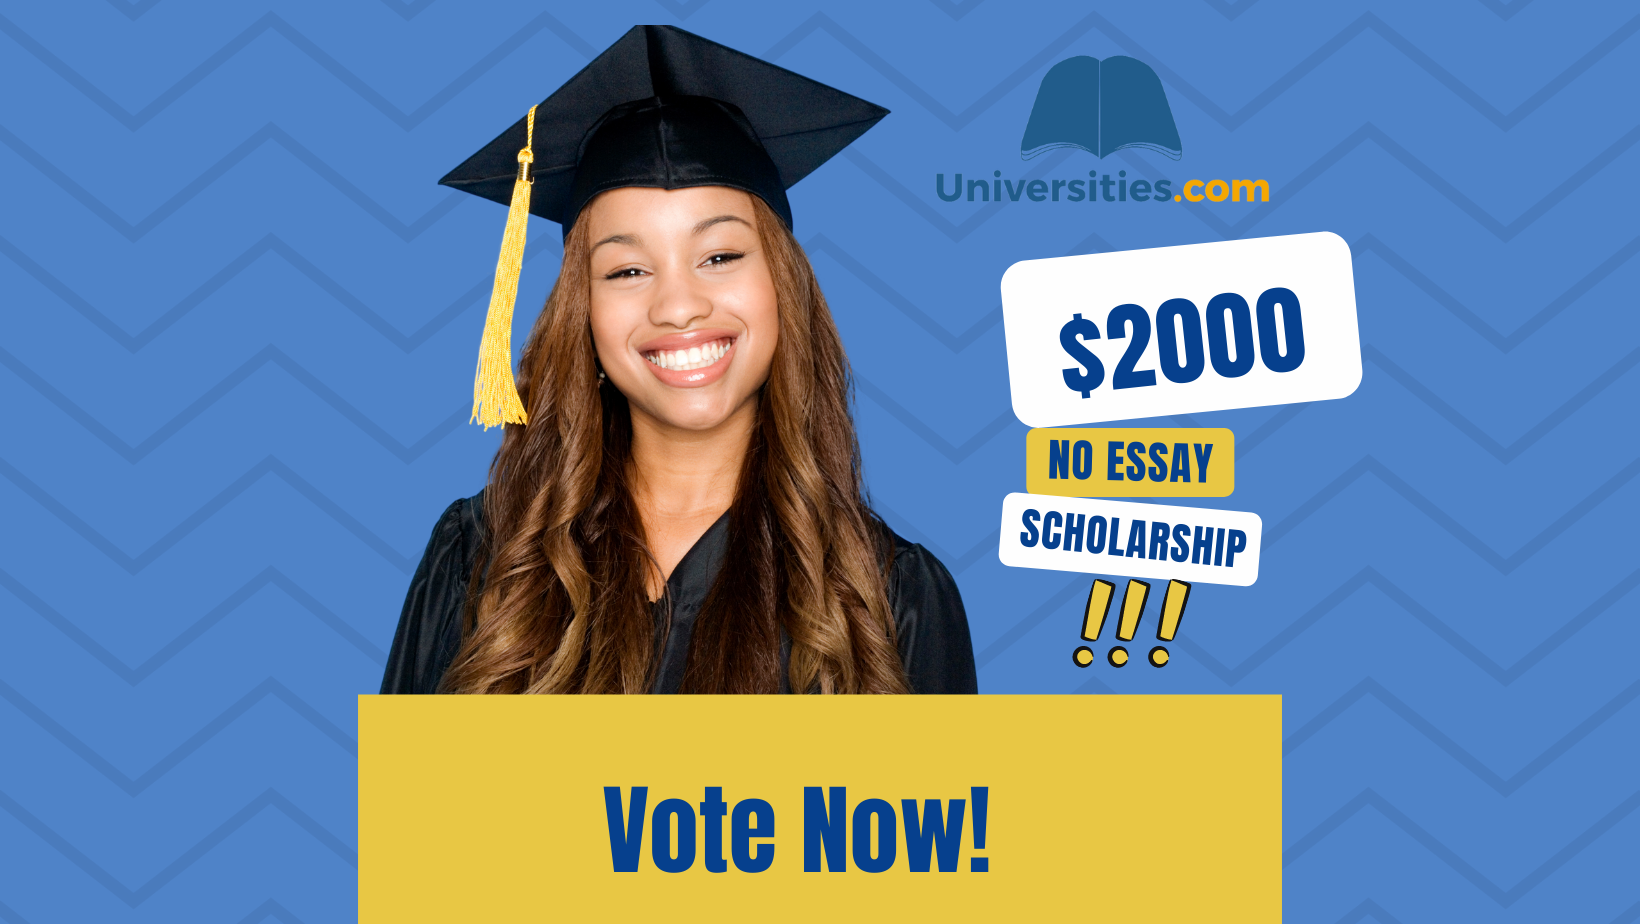 Universities.com $2000 Scholarship